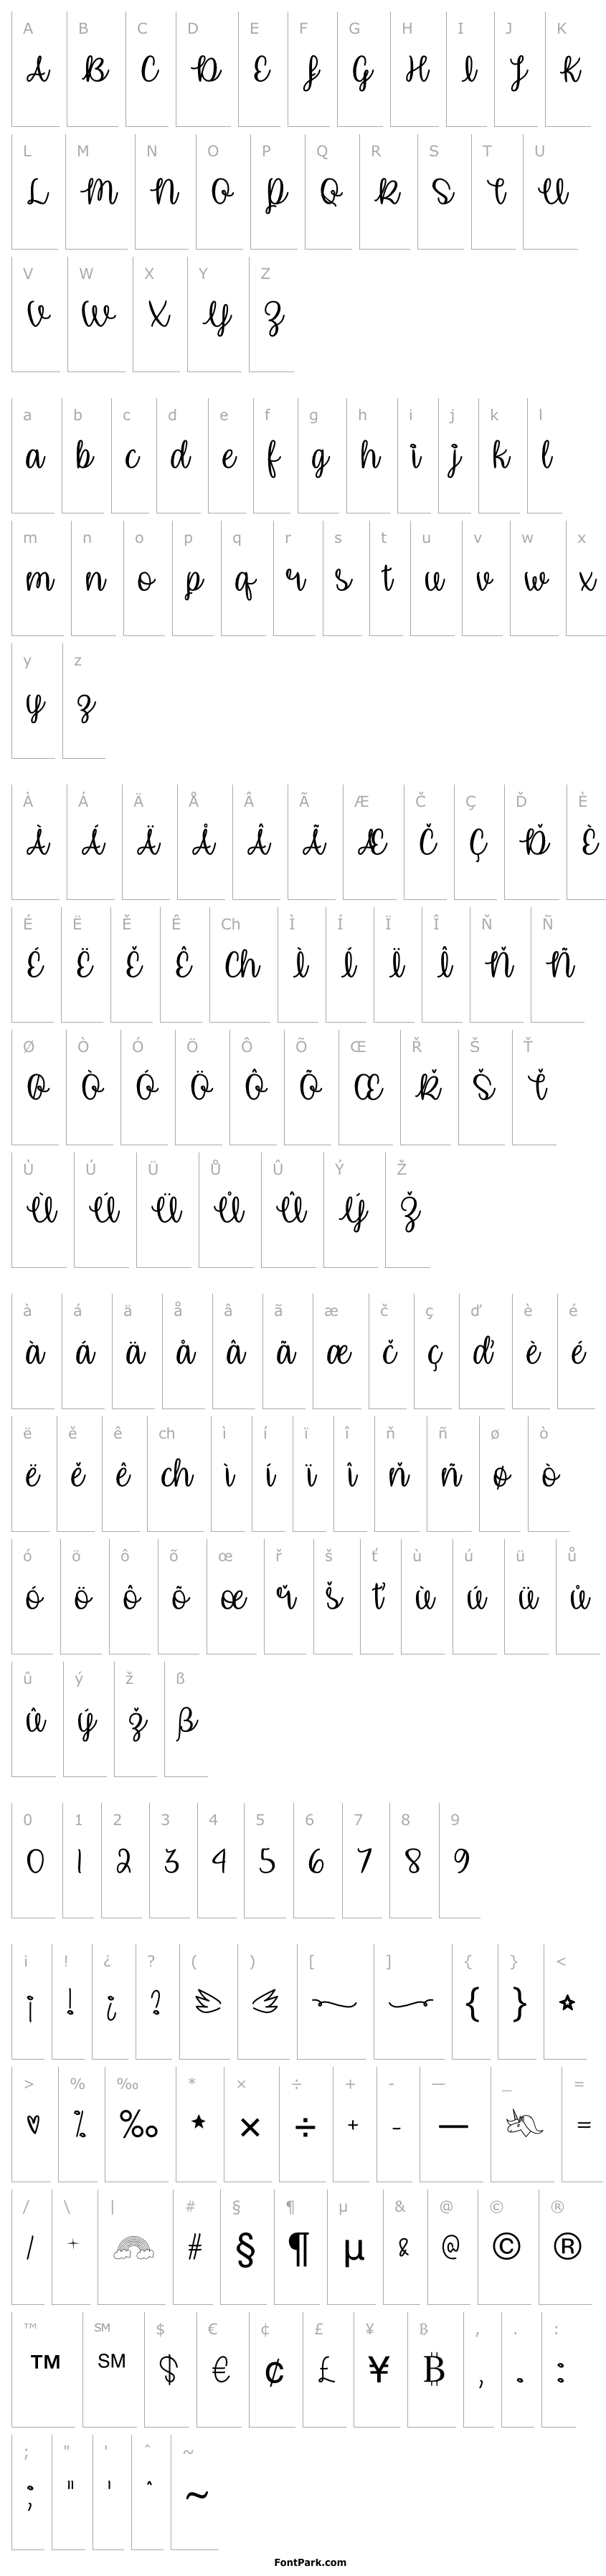 Overview Unicorn Calligraphy